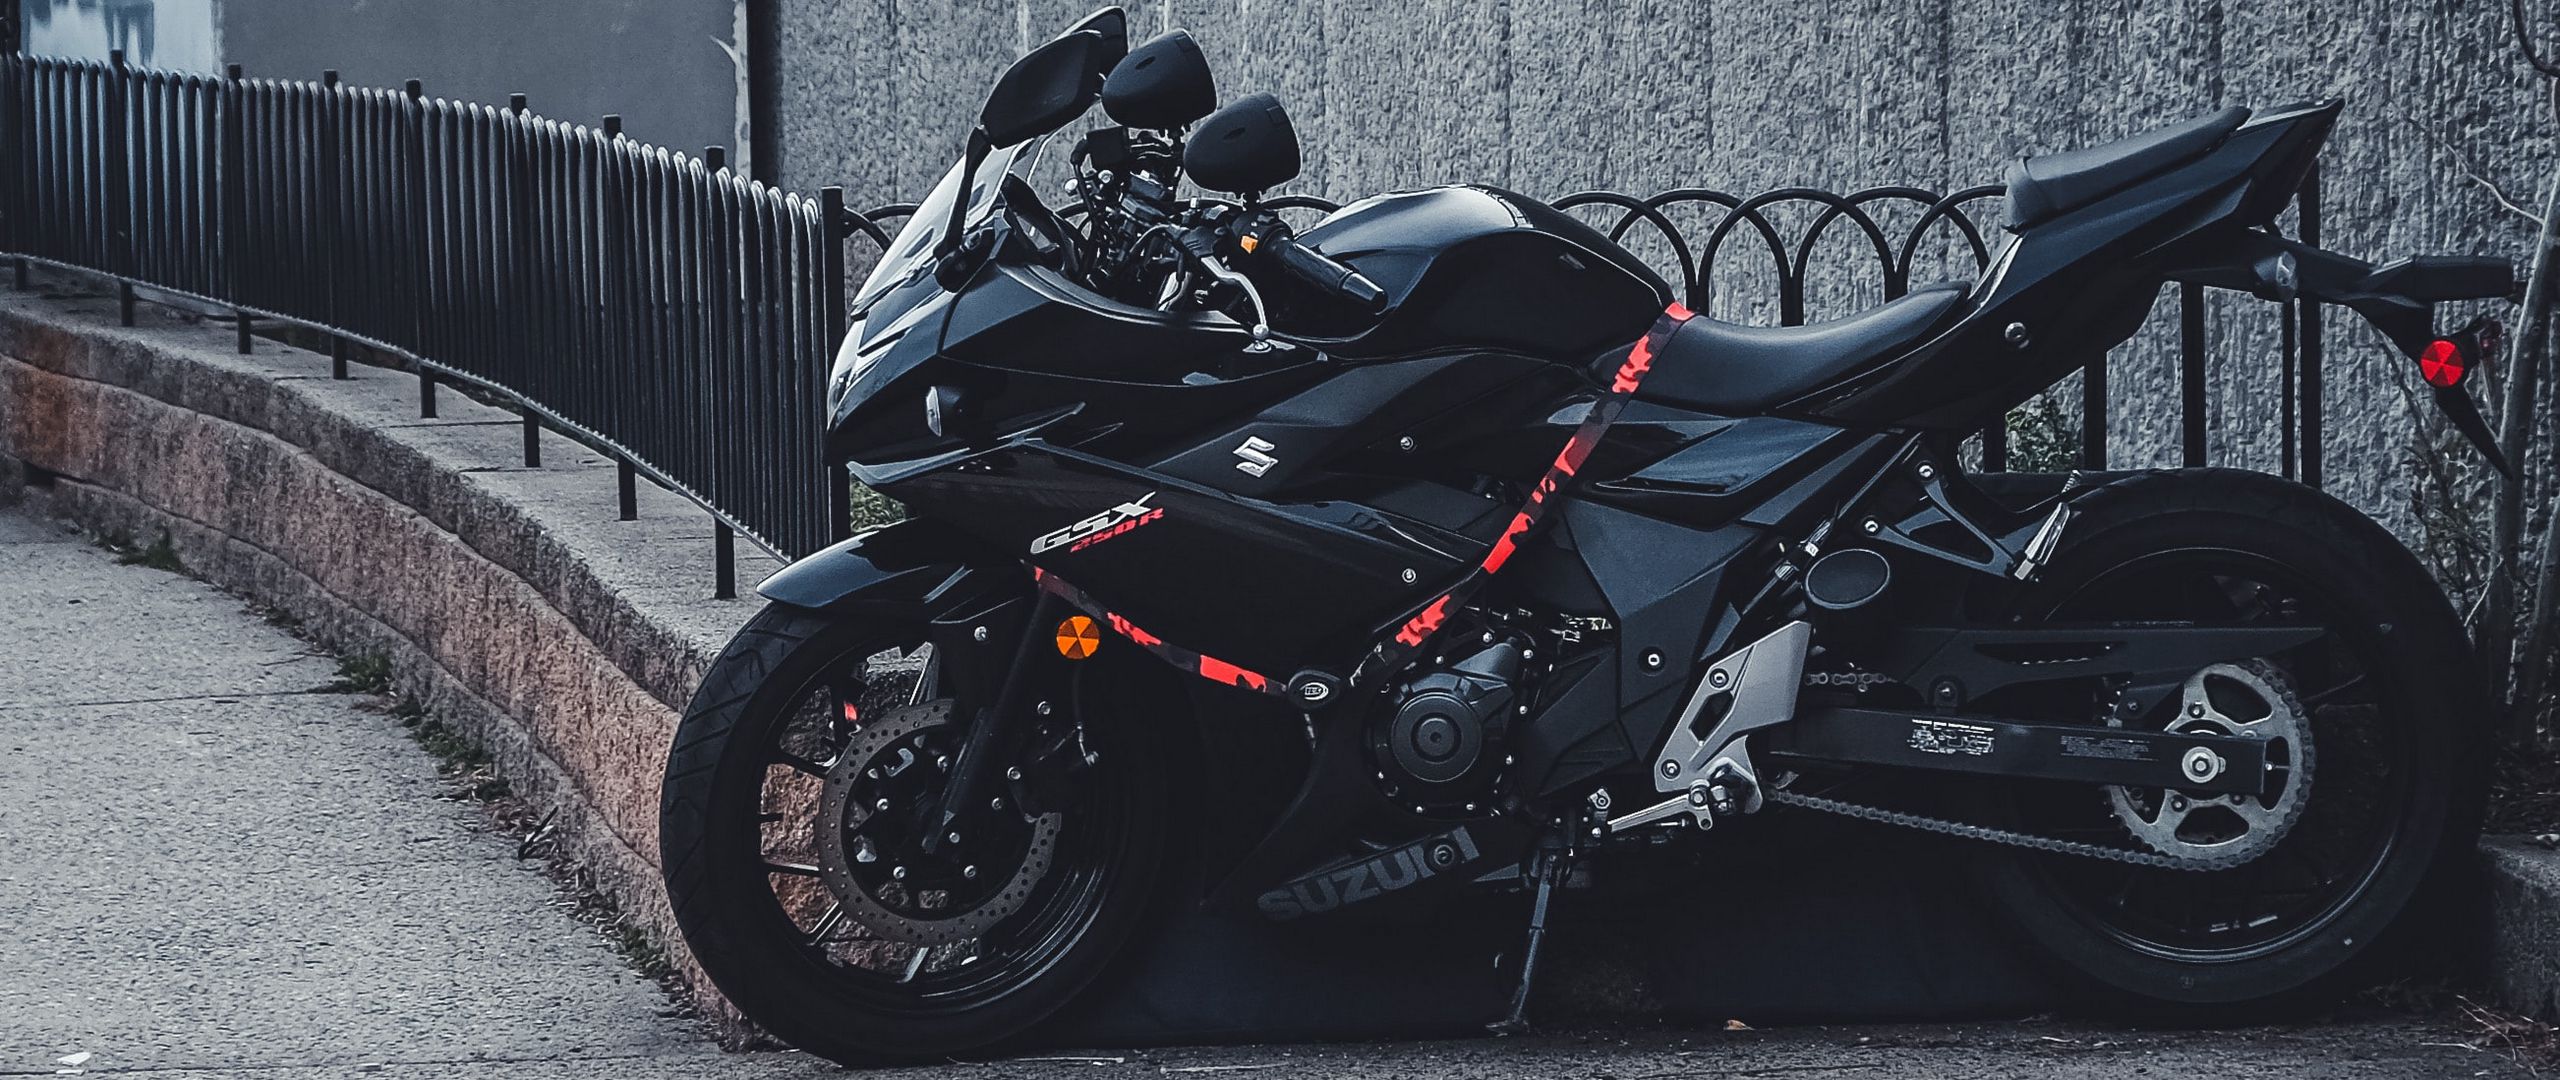 2560x1080 Wallpaper suzuki, motorcycle, bike, black, parking